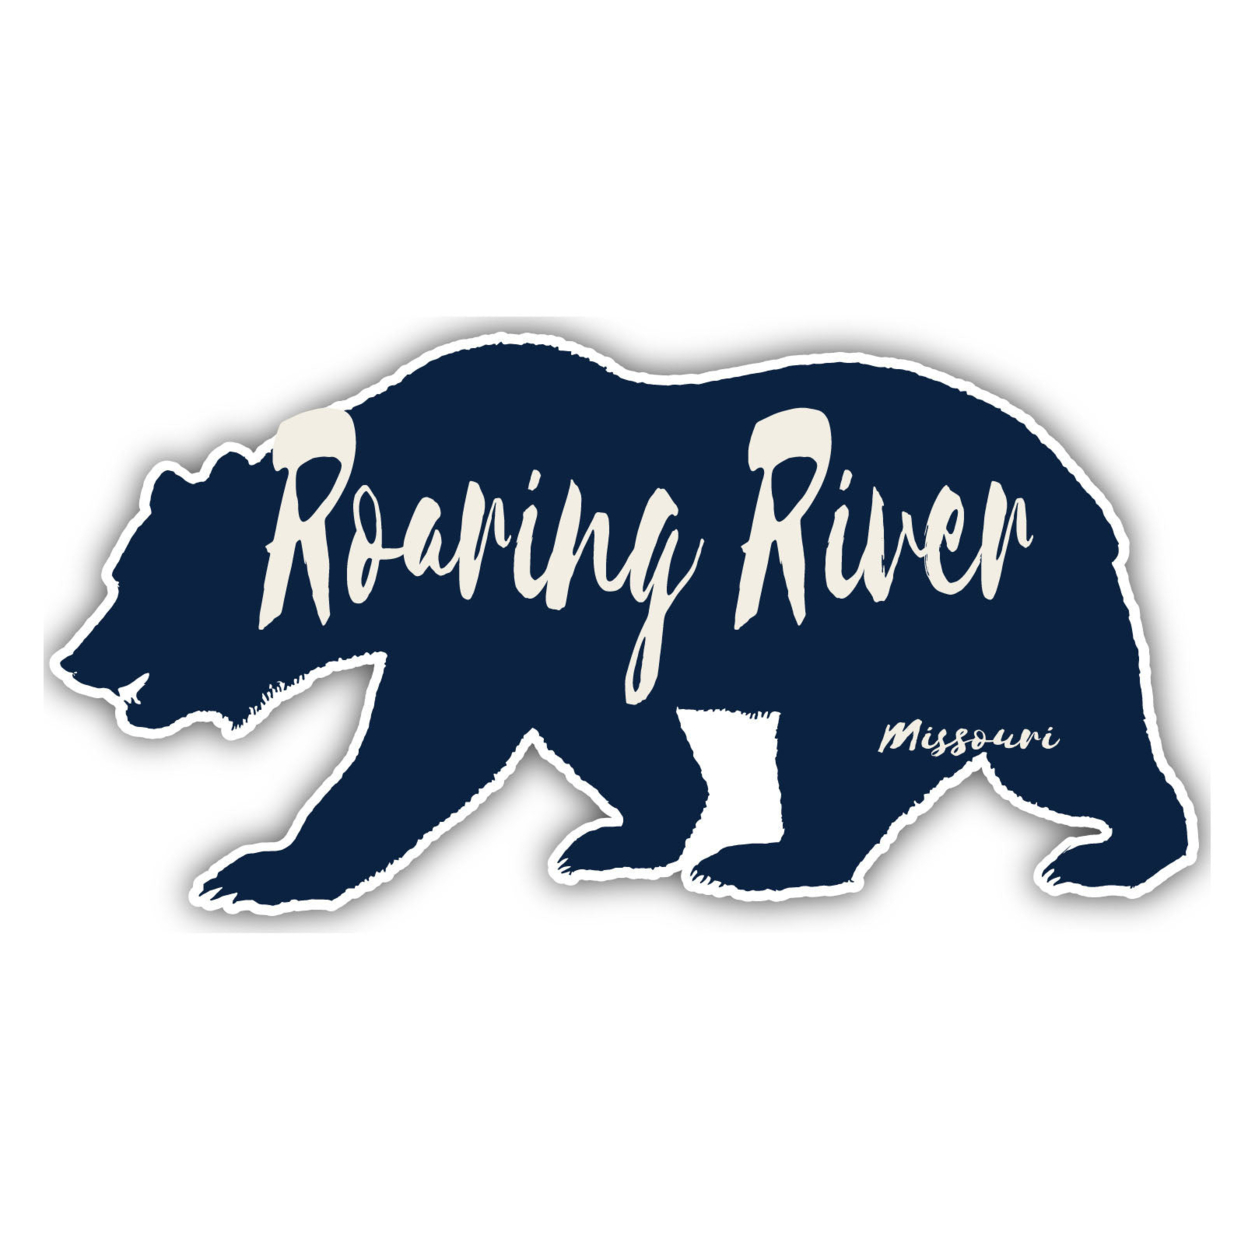 Roaring River Missouri Souvenir Decorative Stickers (Choose Theme And Size) - Single Unit, 4-Inch, Bear